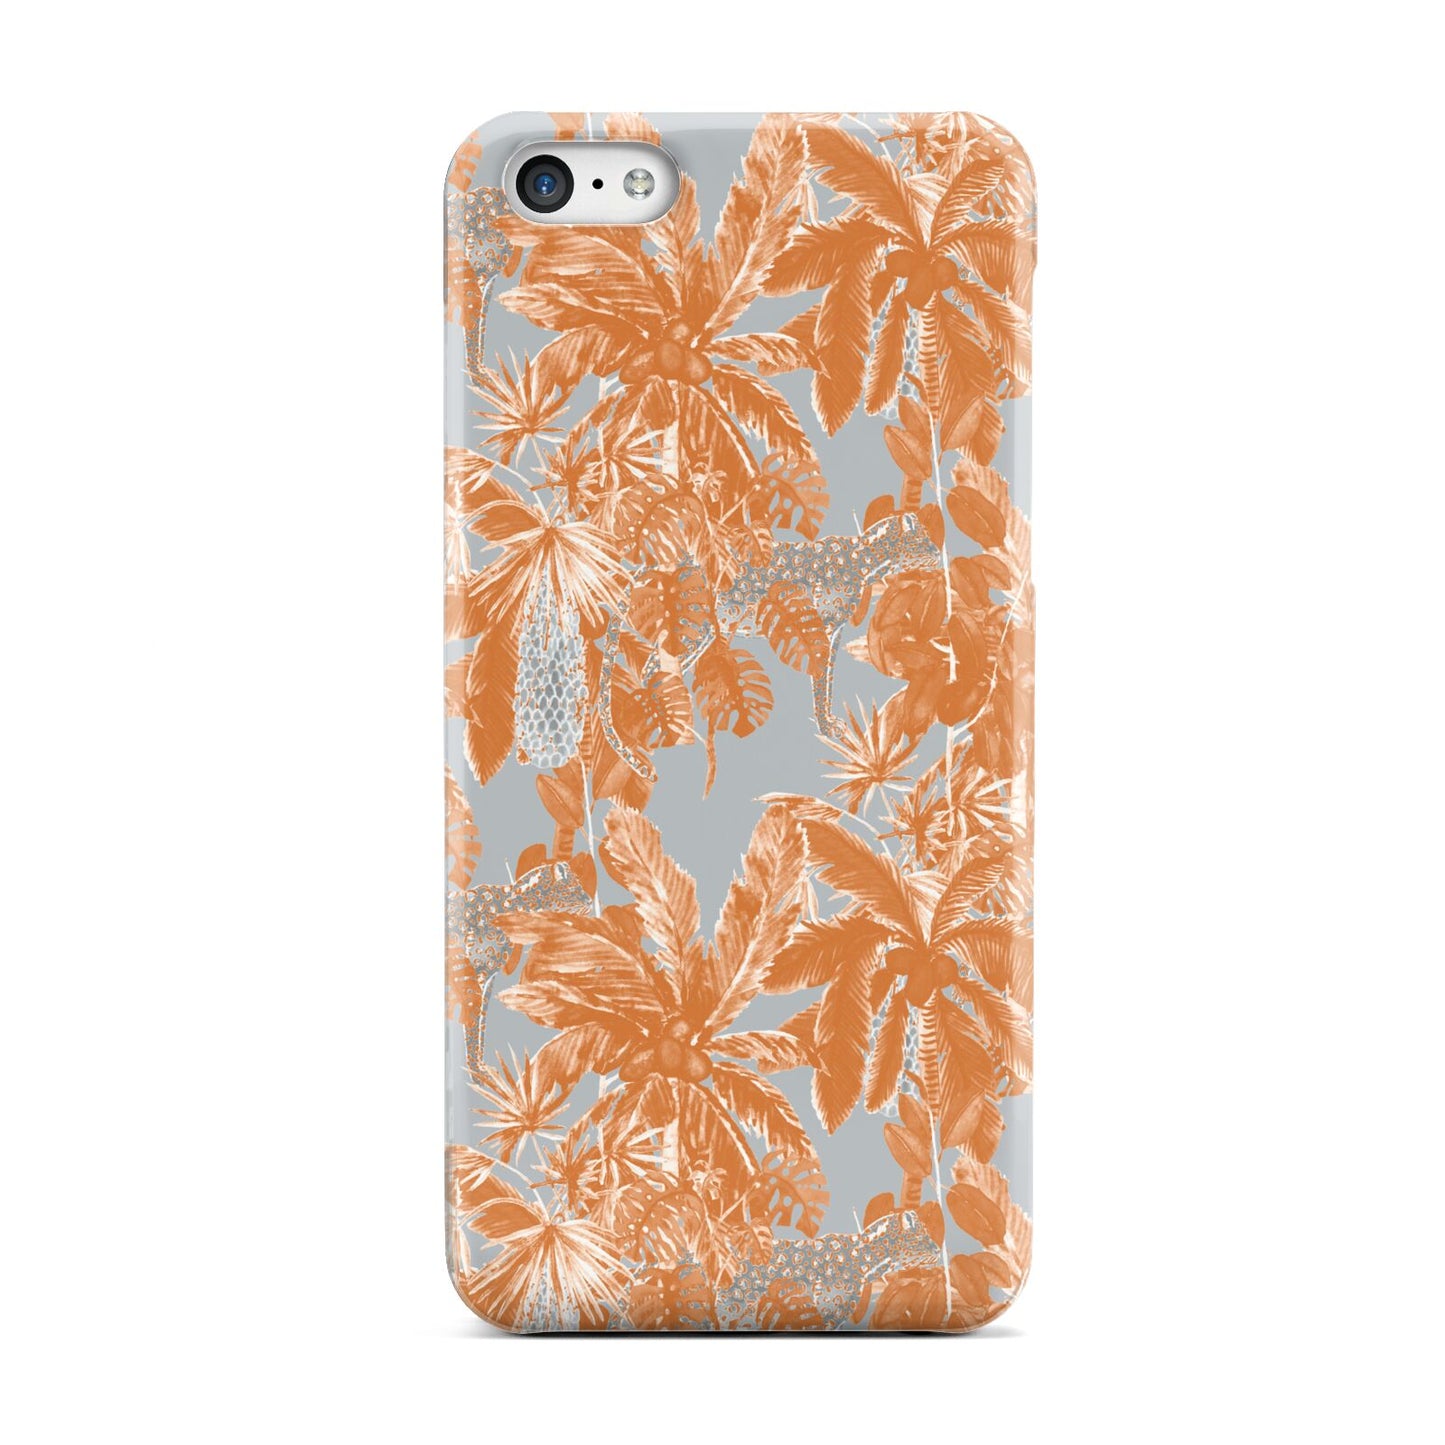 Tropical Apple iPhone 5c Case